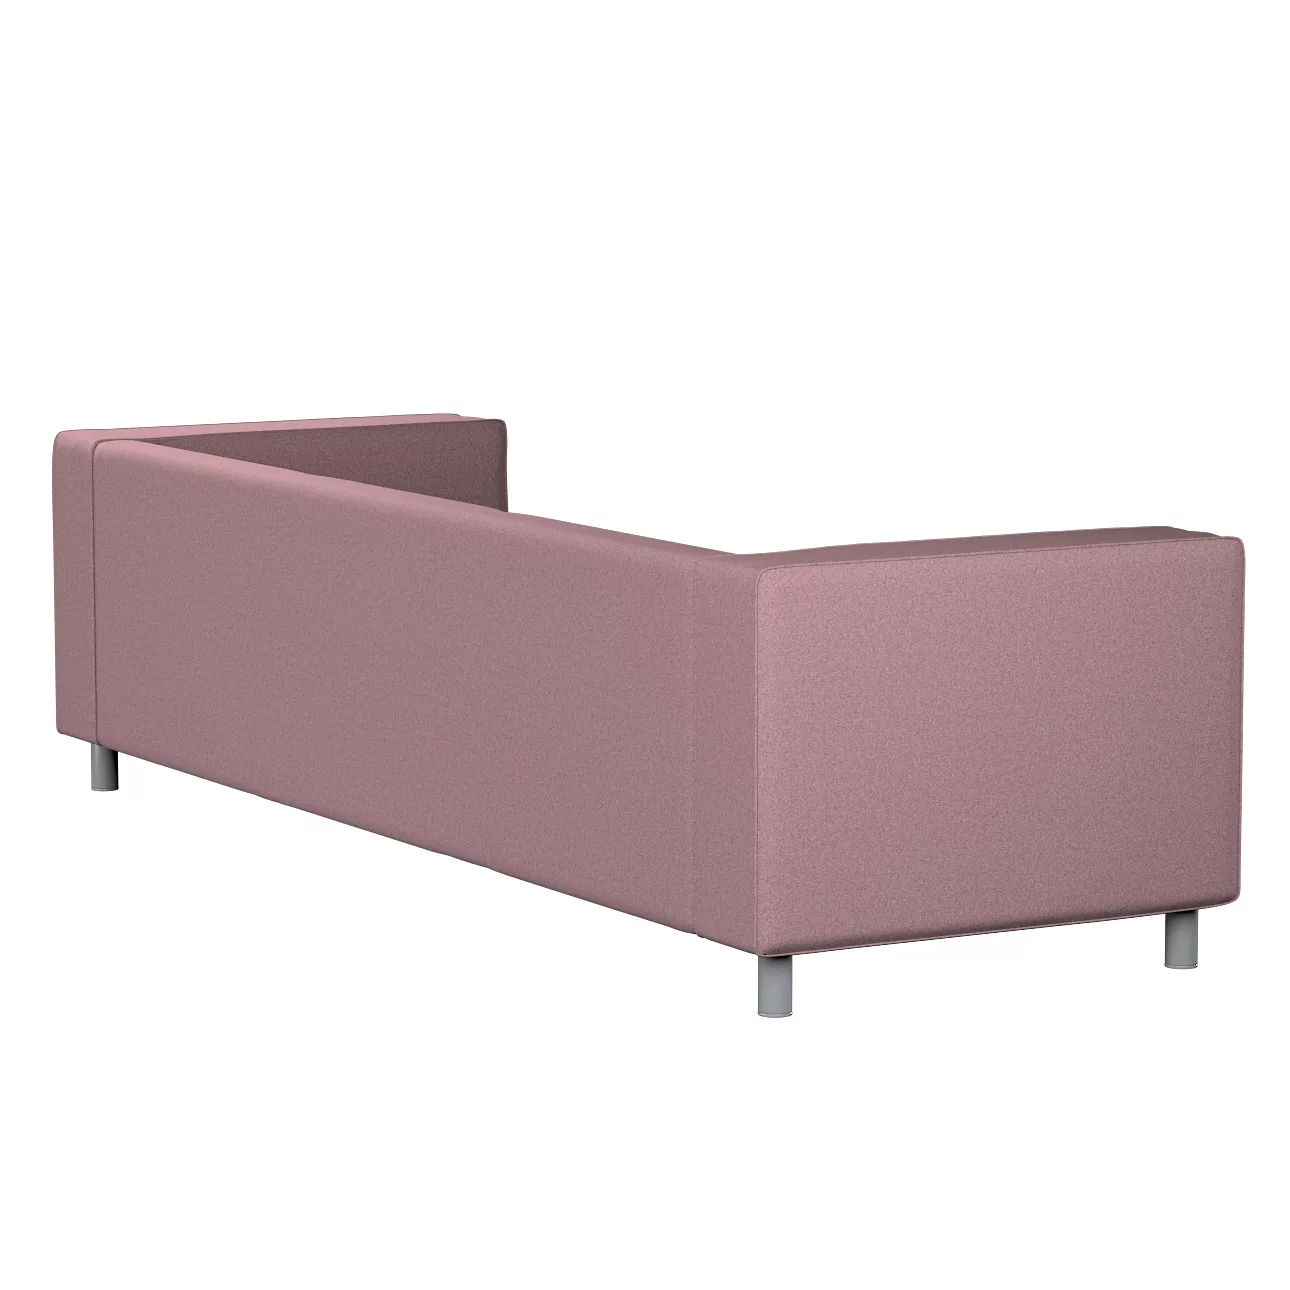 Bezug für Klippan 4-Sitzer Sofa, schwarz--rosa, Bezug für Klippan 4-Sitzer, günstig online kaufen